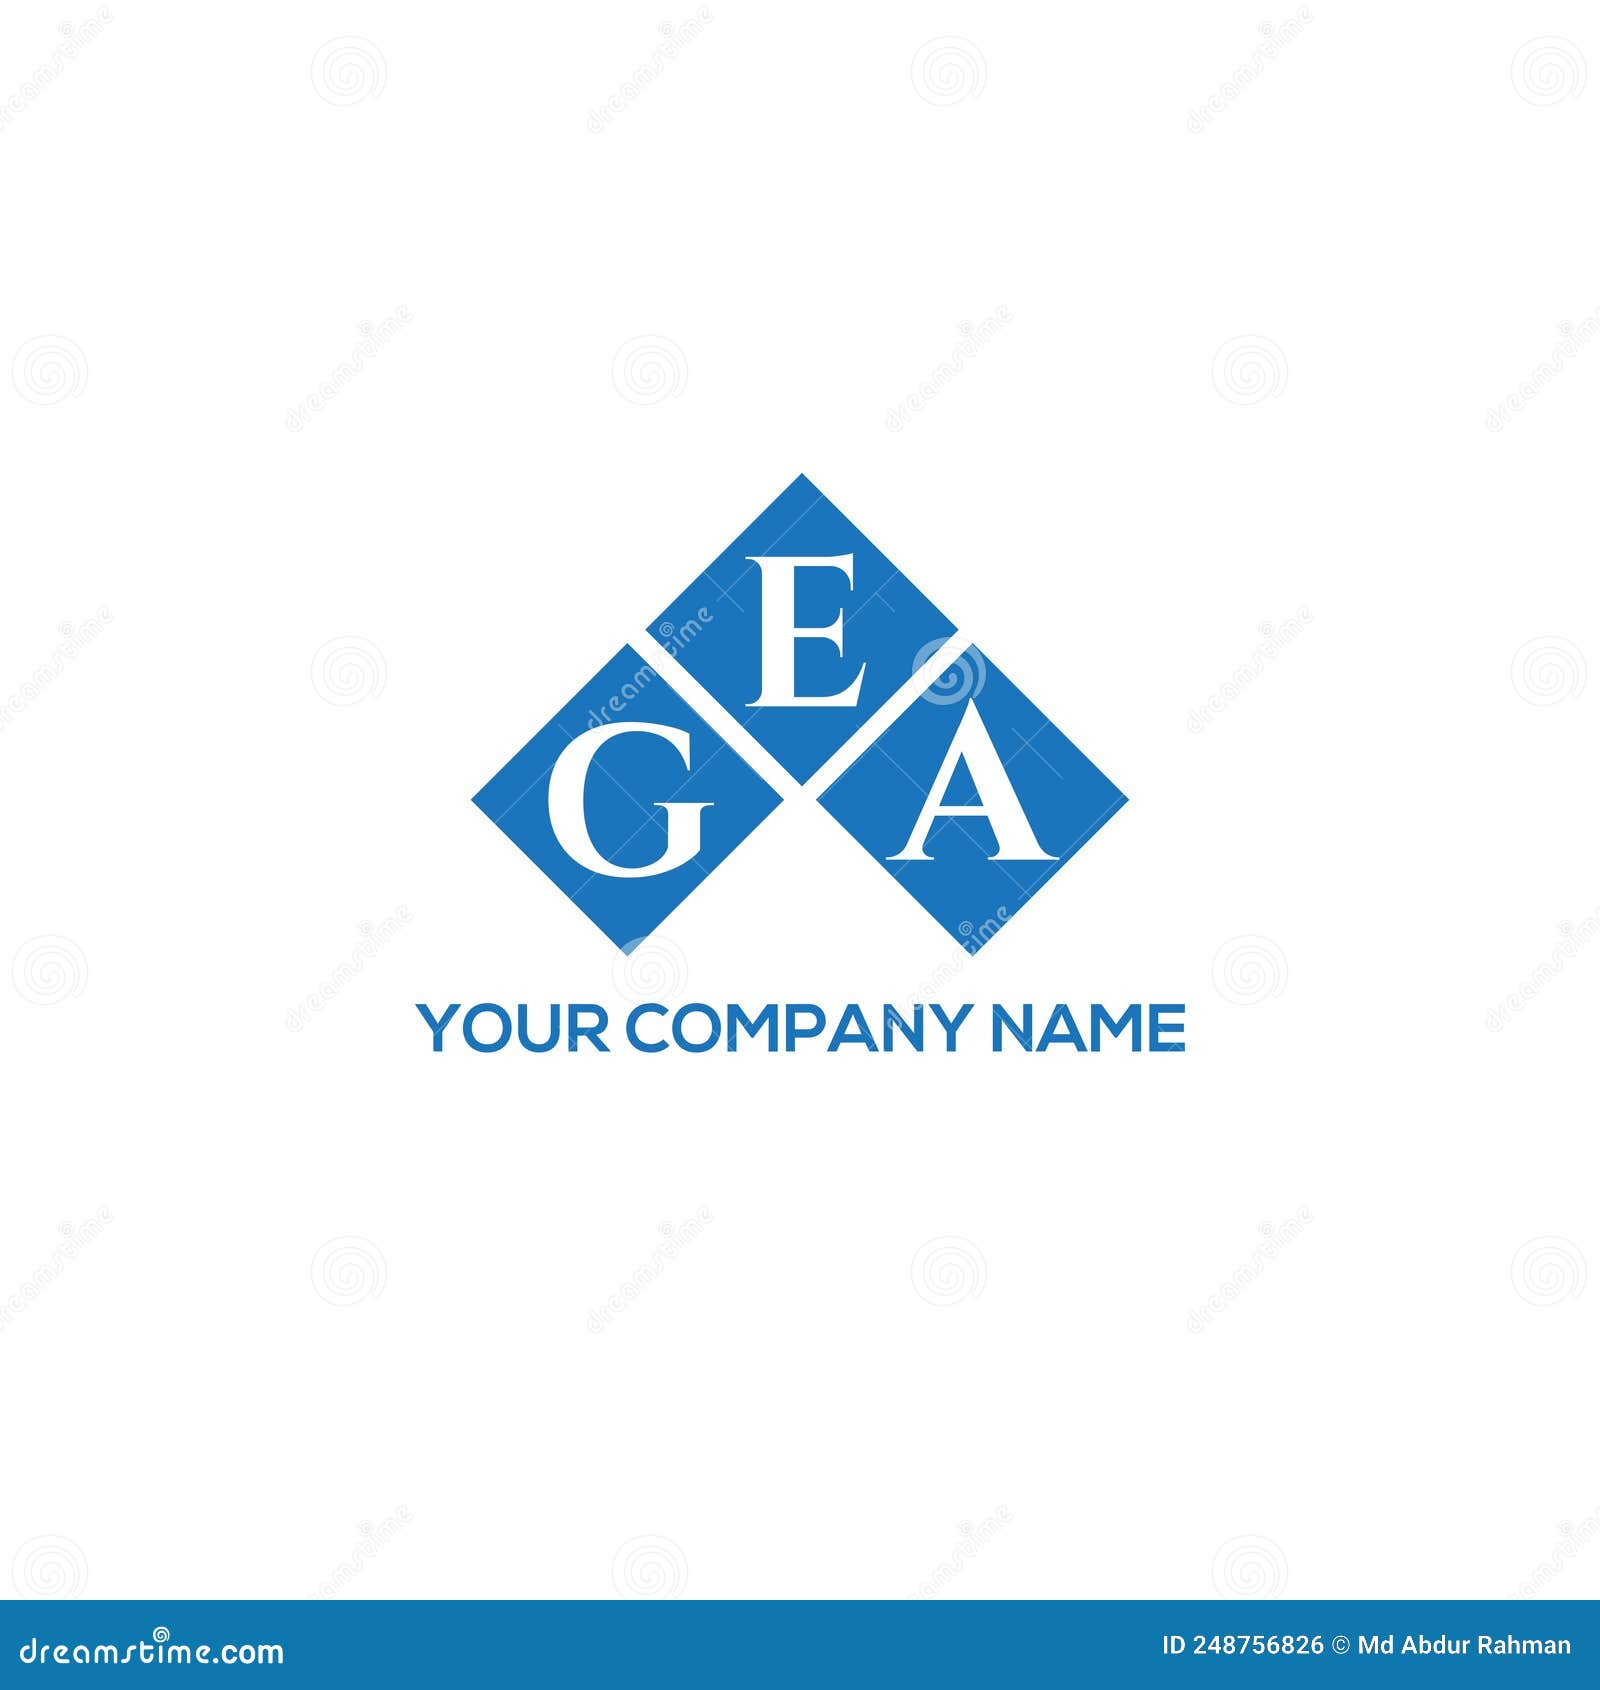 gea letter logo  on black background. gea creative initials letter logo concept. gea letter .gea letter logo  on